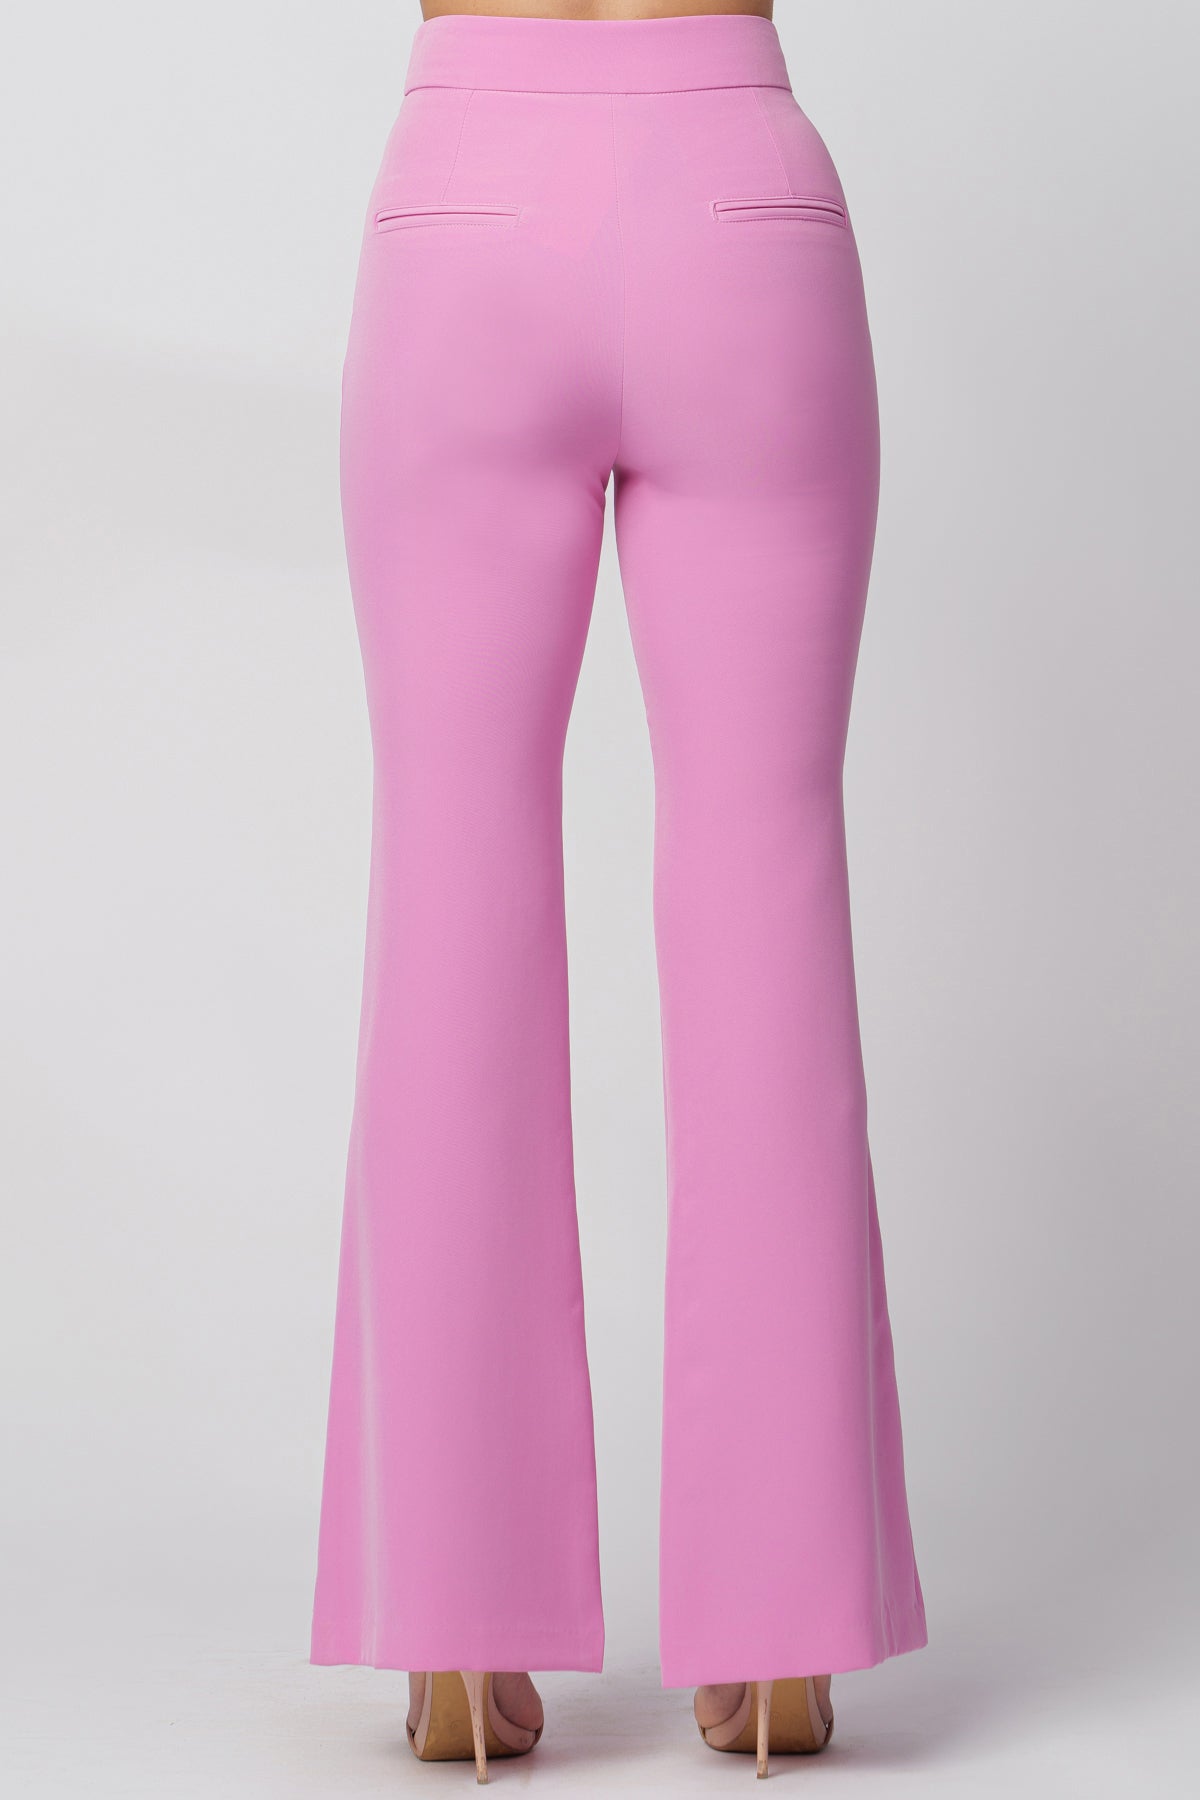 Pantalone Flare Flamingo